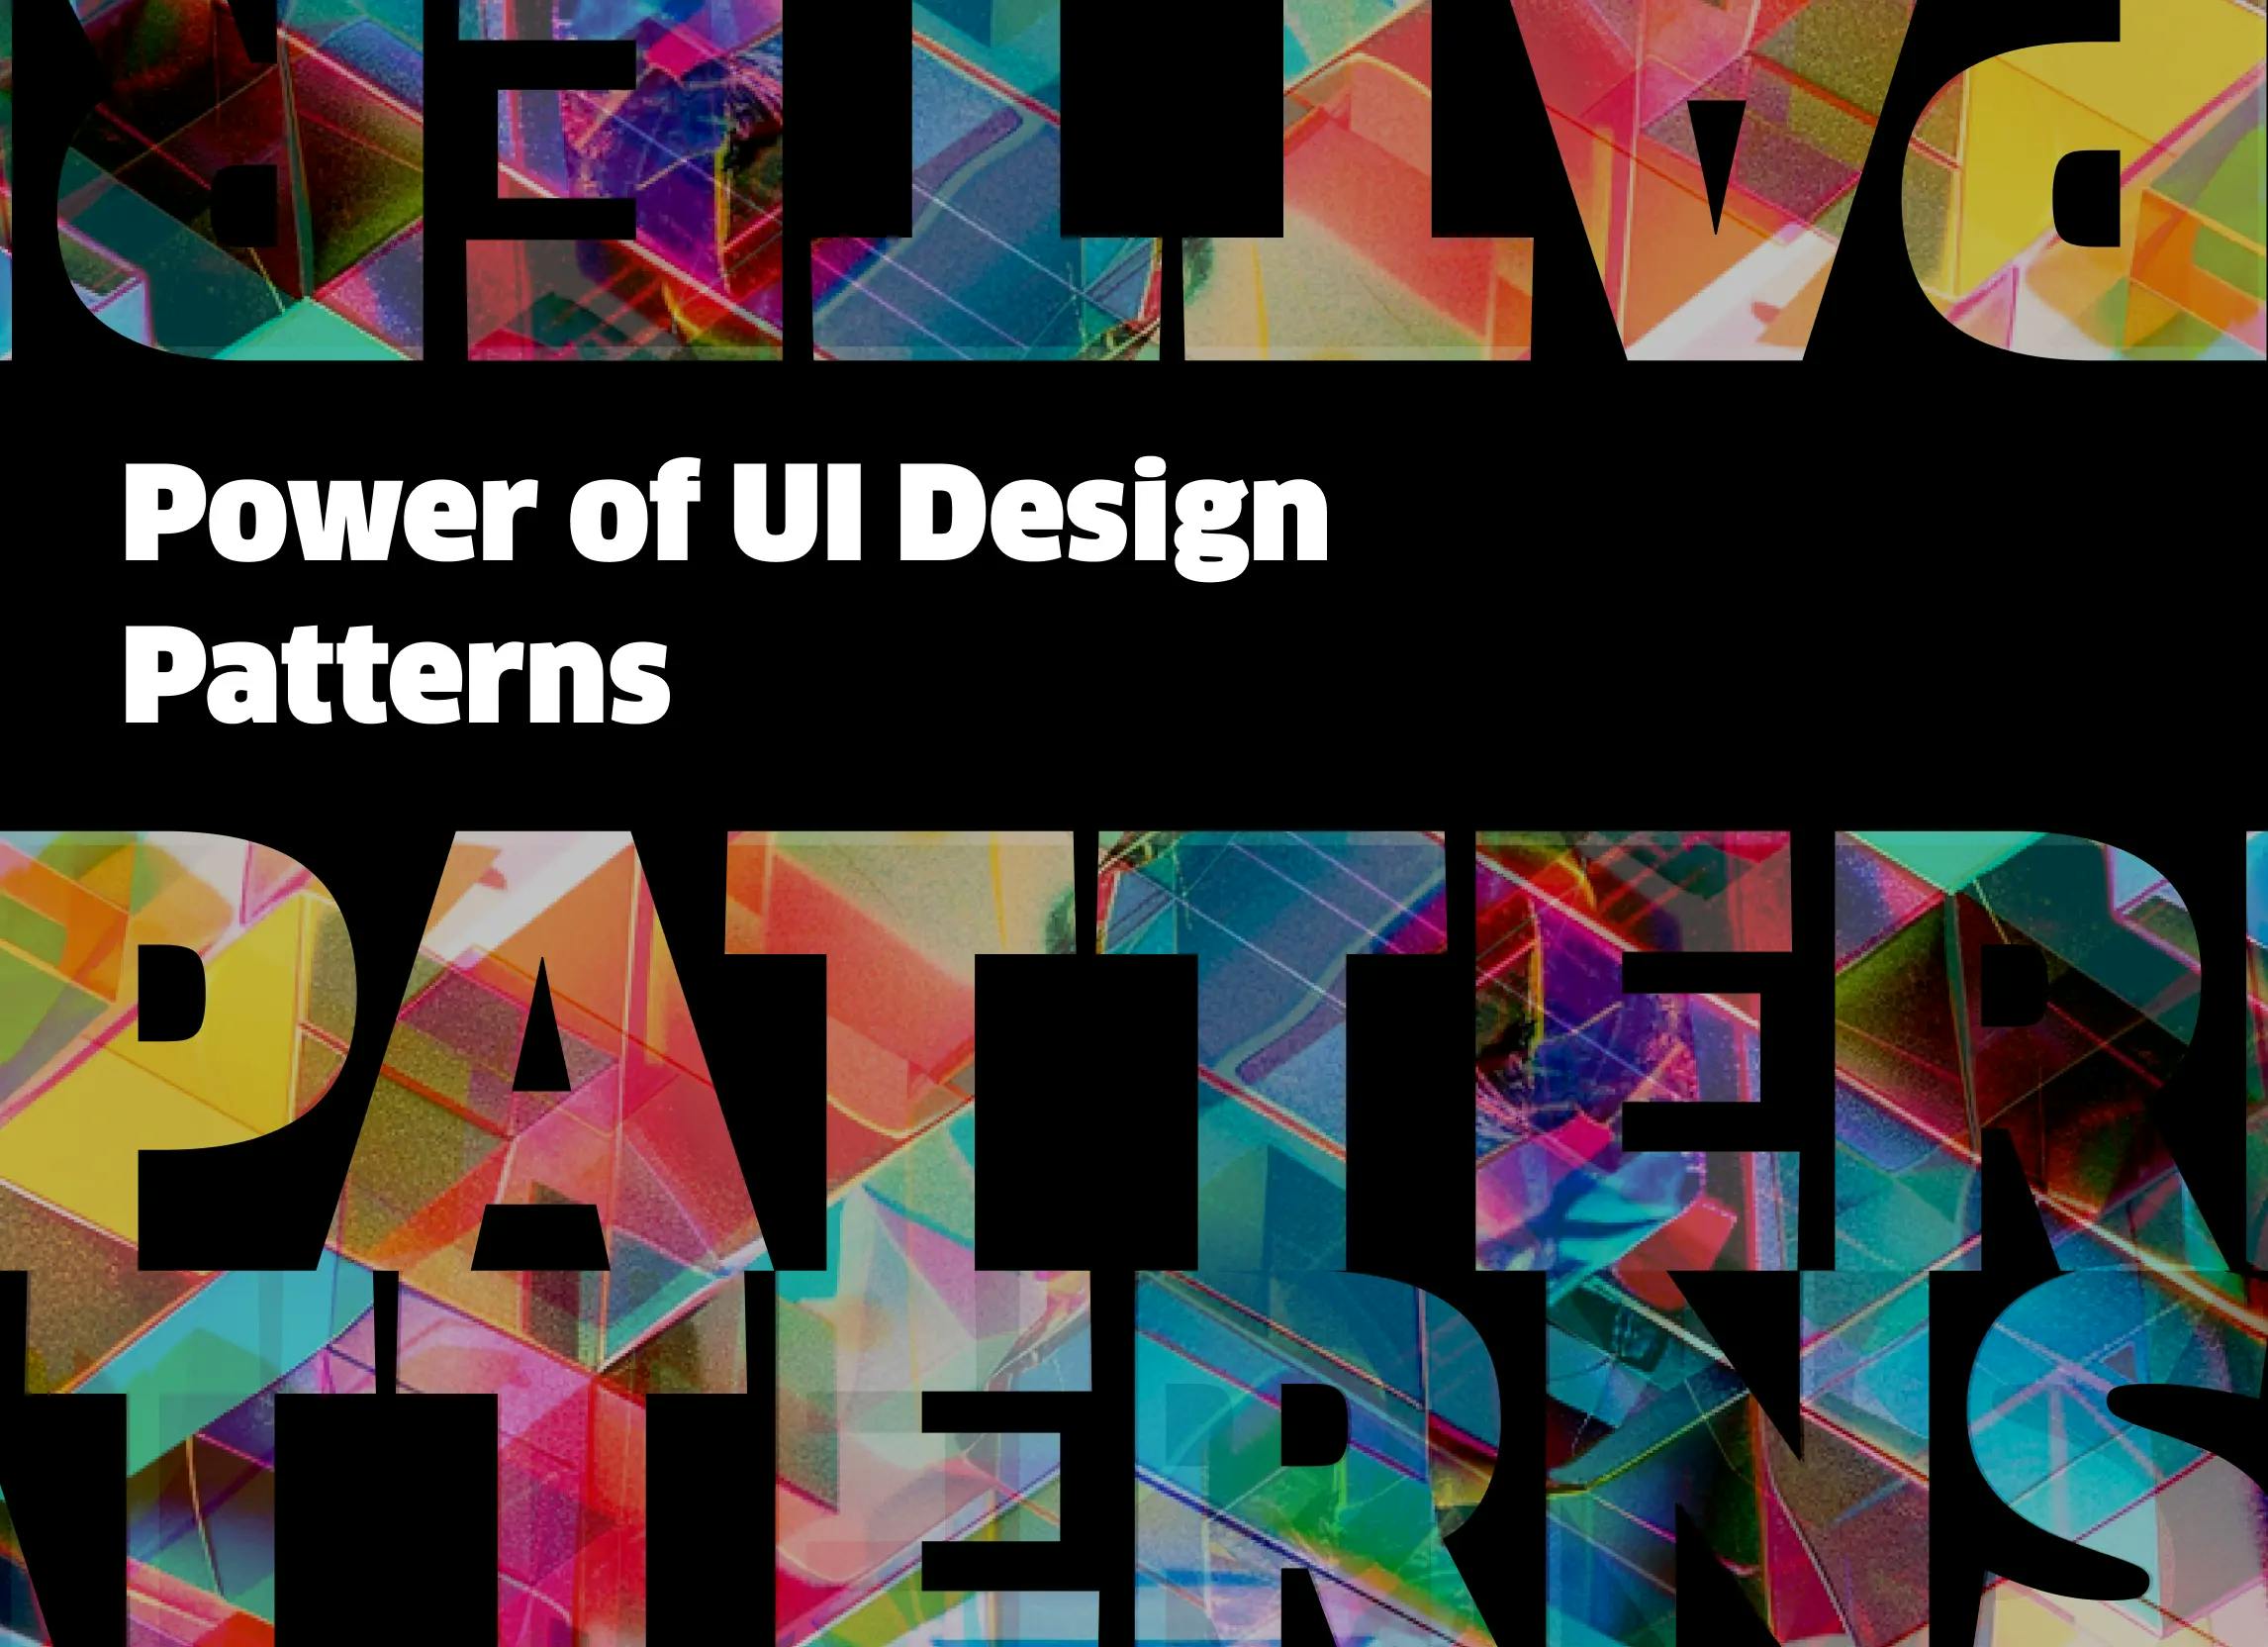 Power of UI design patterns writing on dark background